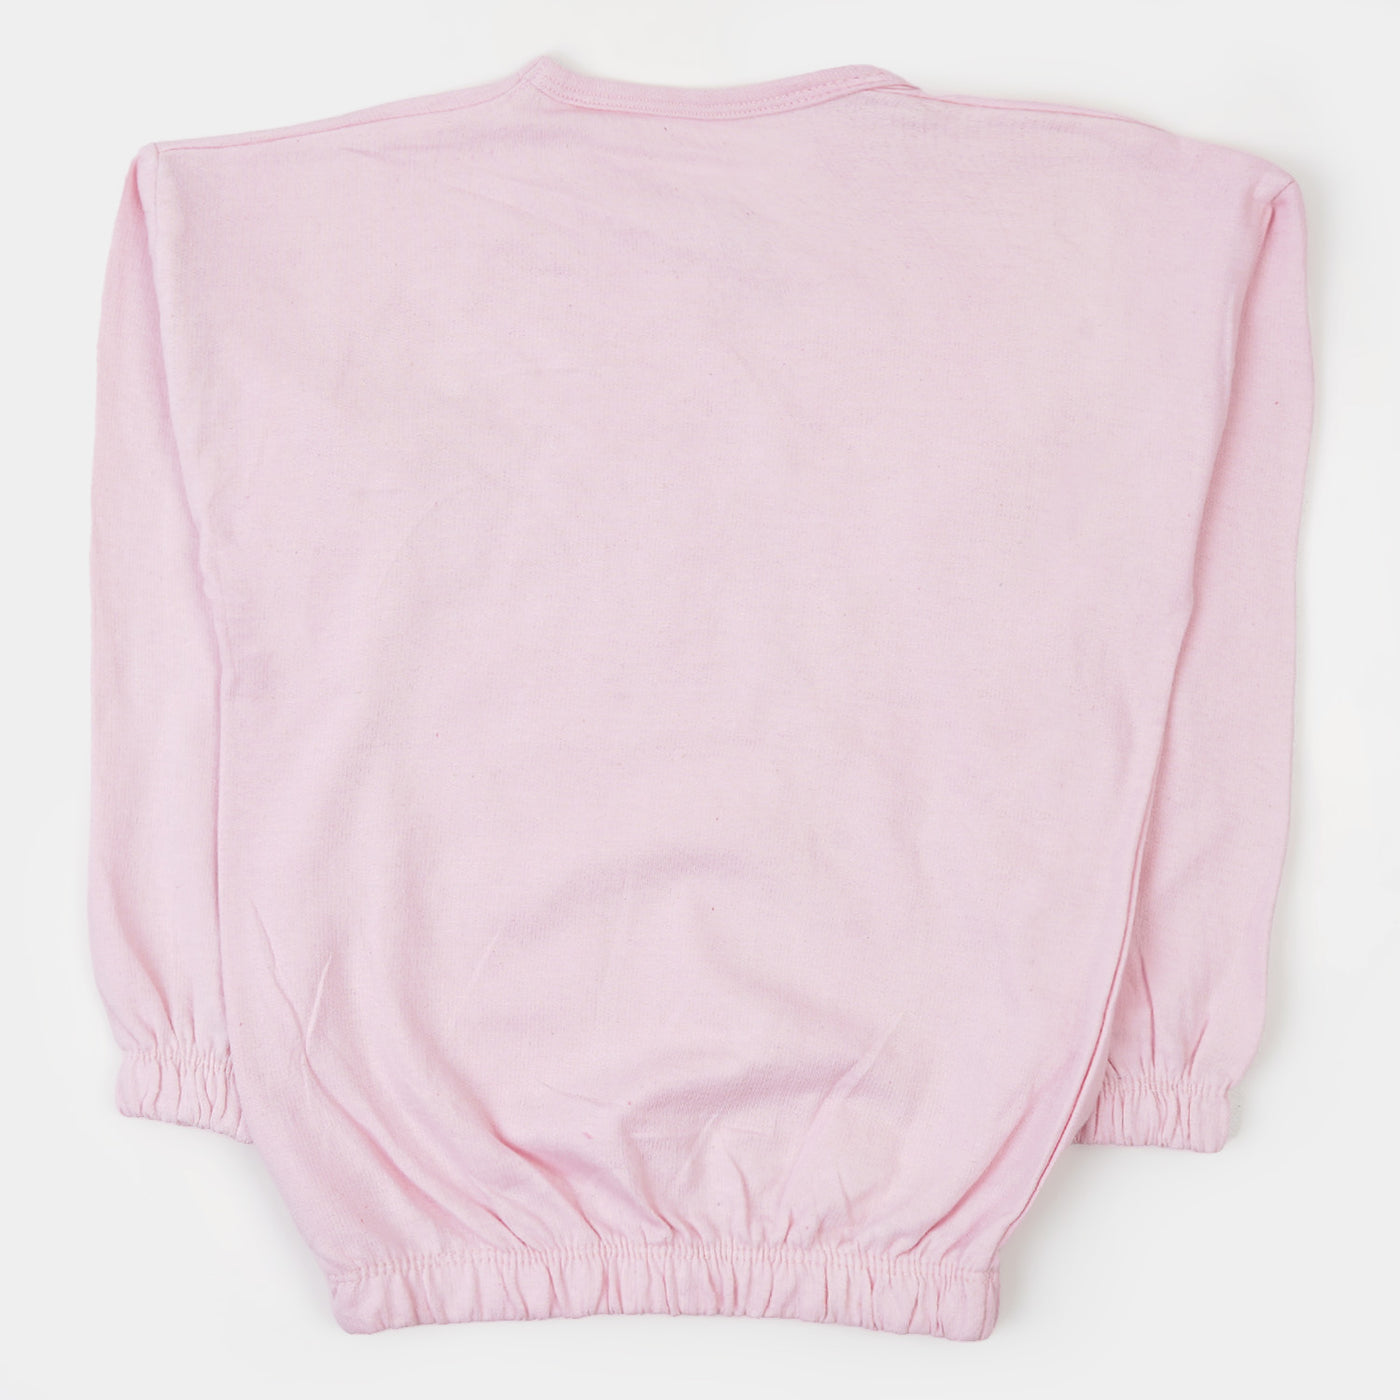 Girls Sweatshirt Hello Friday - Pink